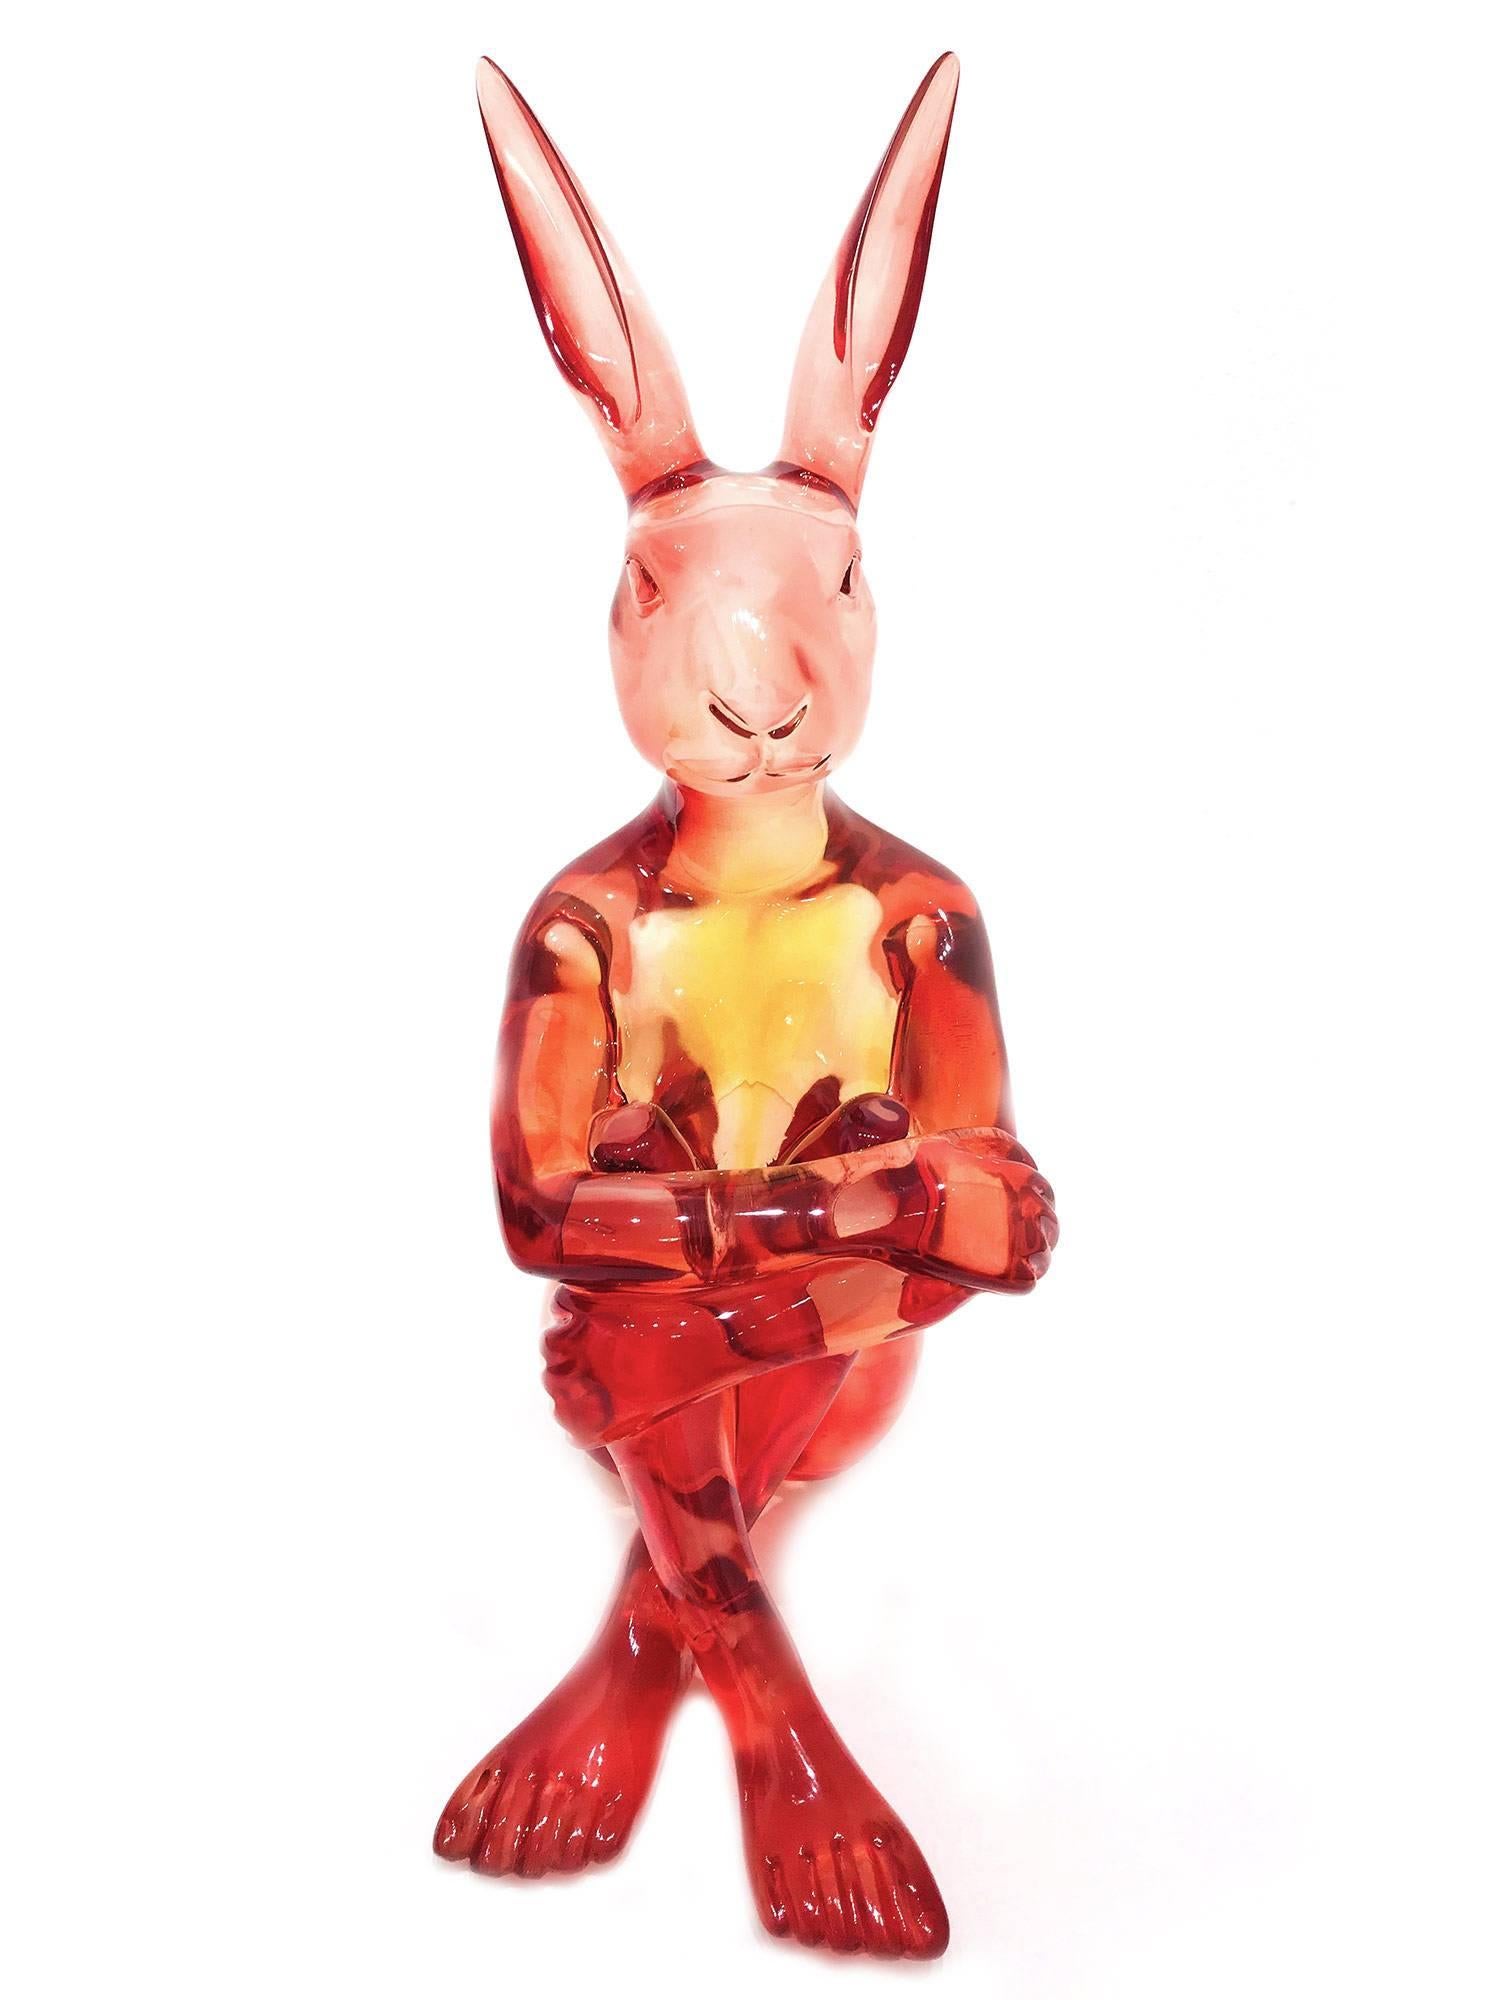 Raspberry Swirl Rabbit Girl - Pop Art Sculpture by Gillie and Marc Schattner